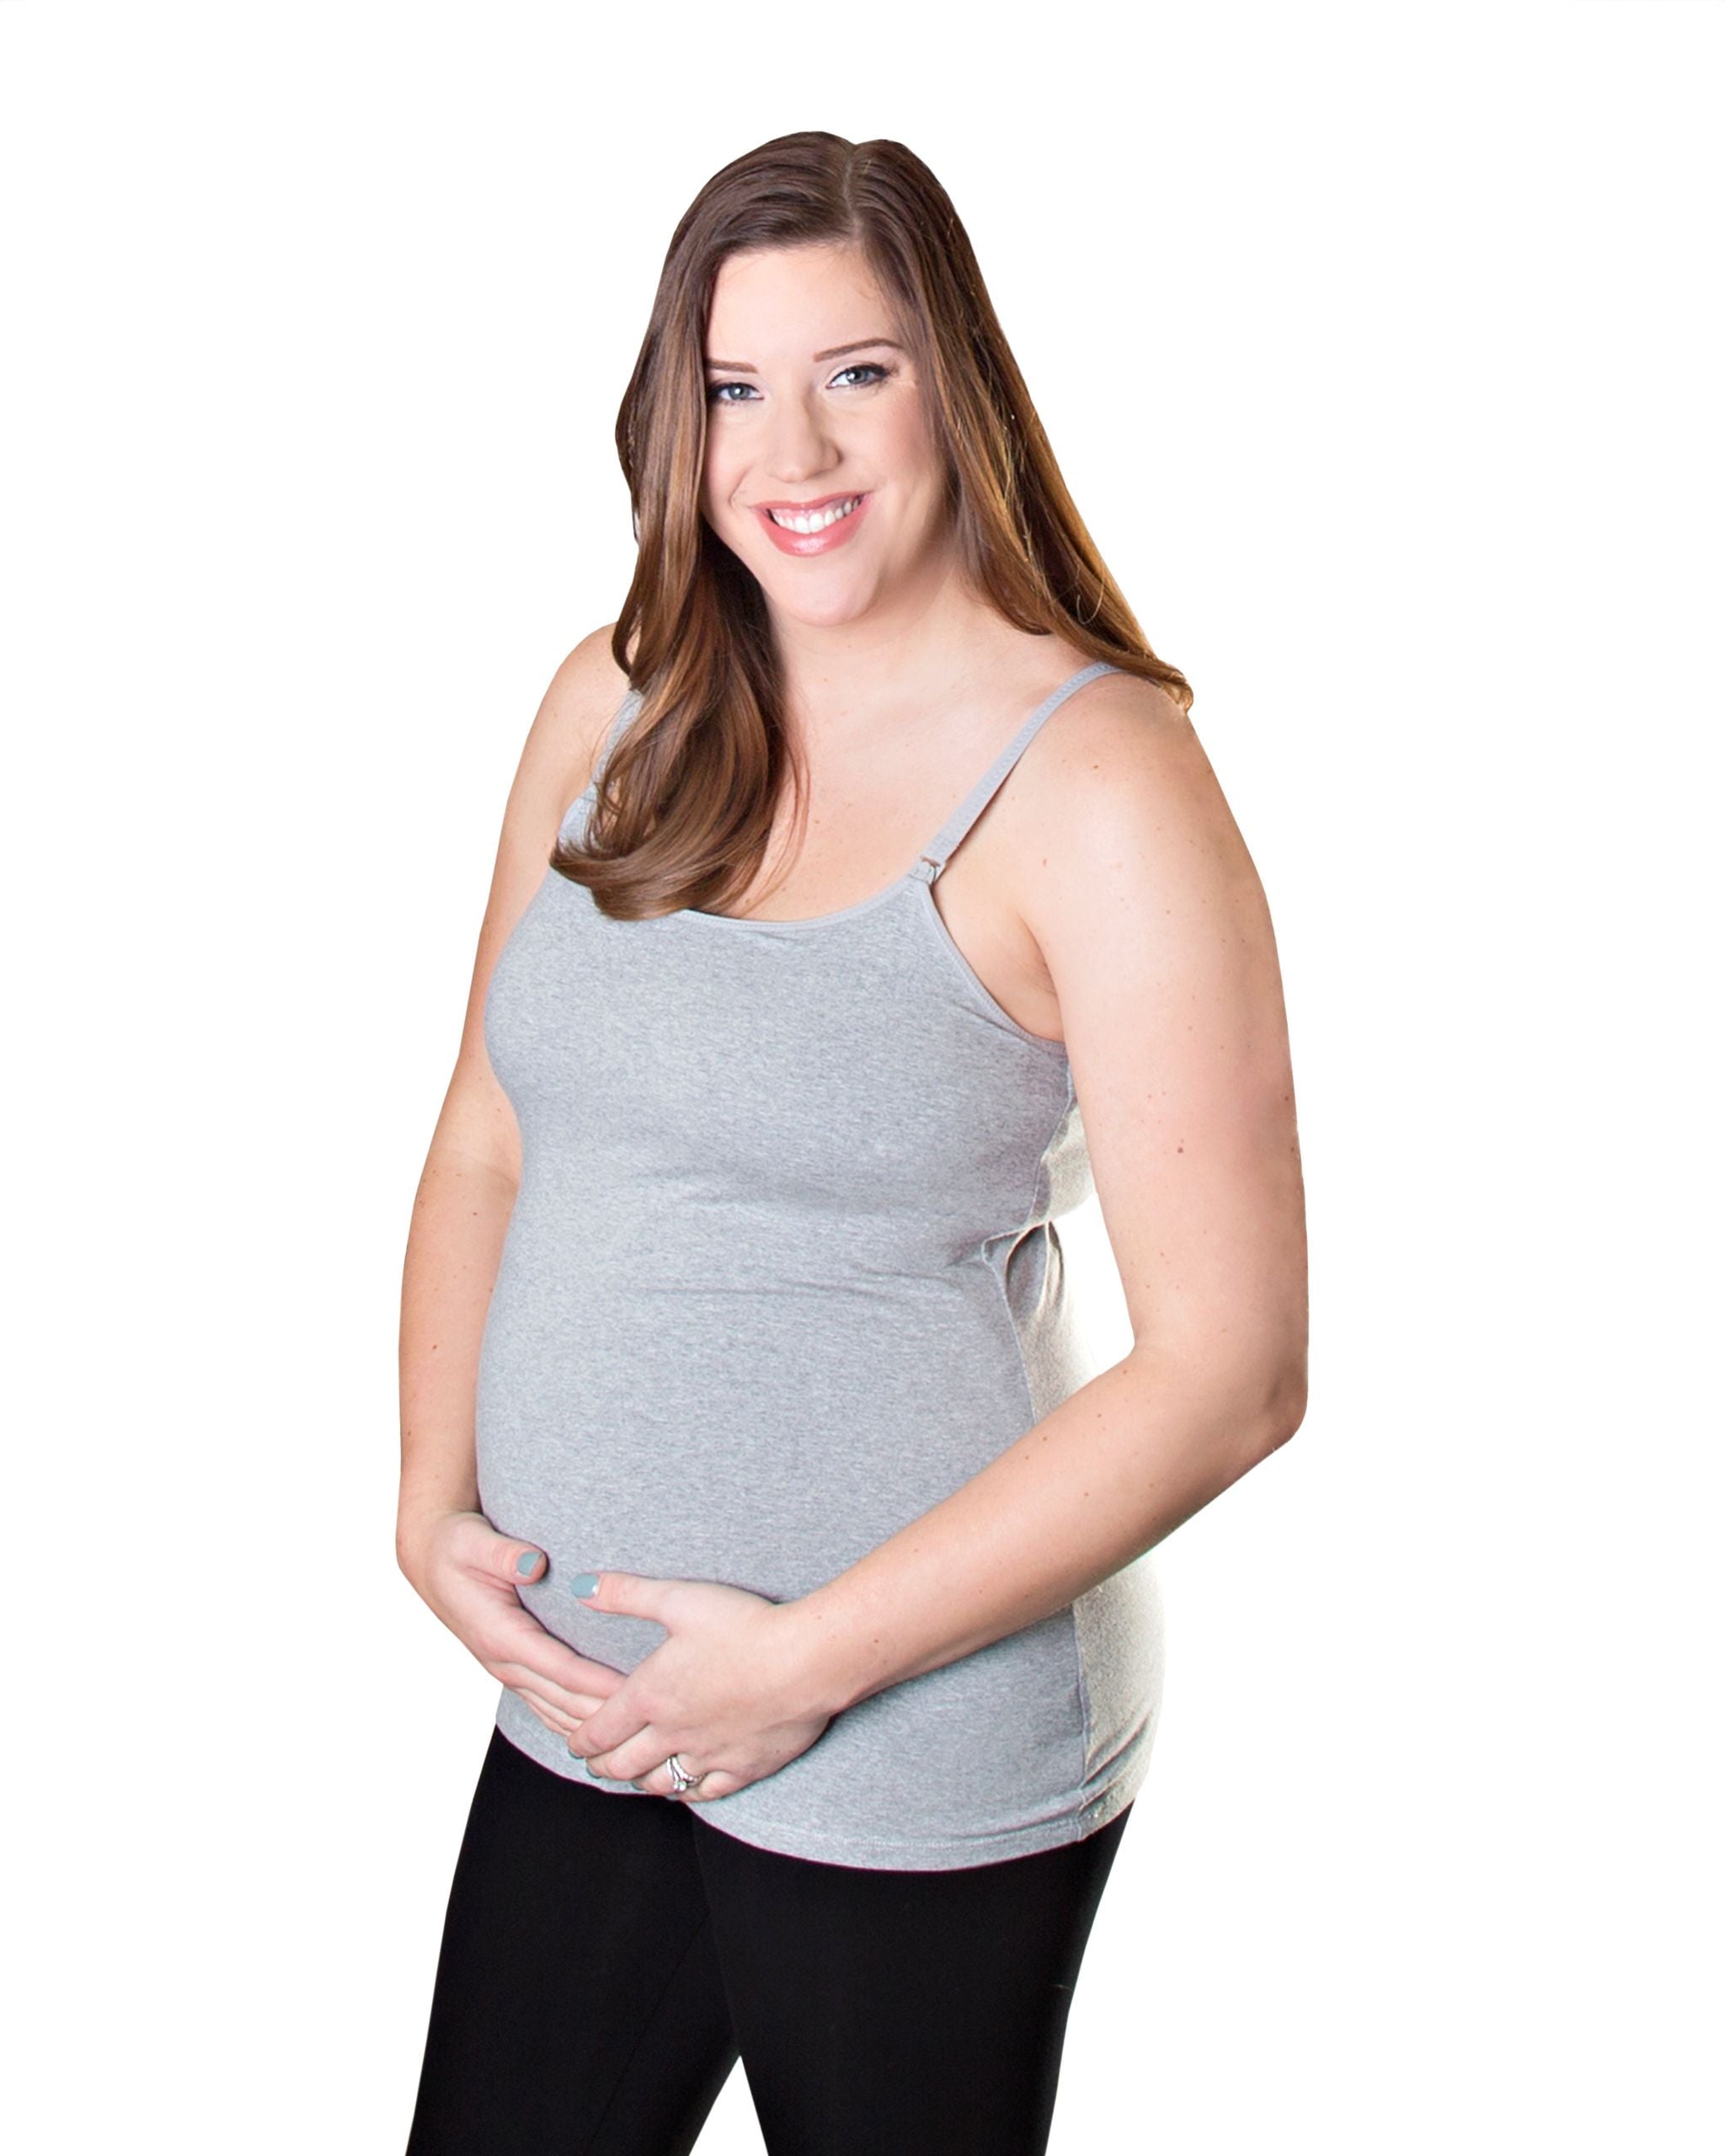 Buy BODYCARE Pack of 3 Maternity/Feeding Bra in White Colour - E1523WWW at